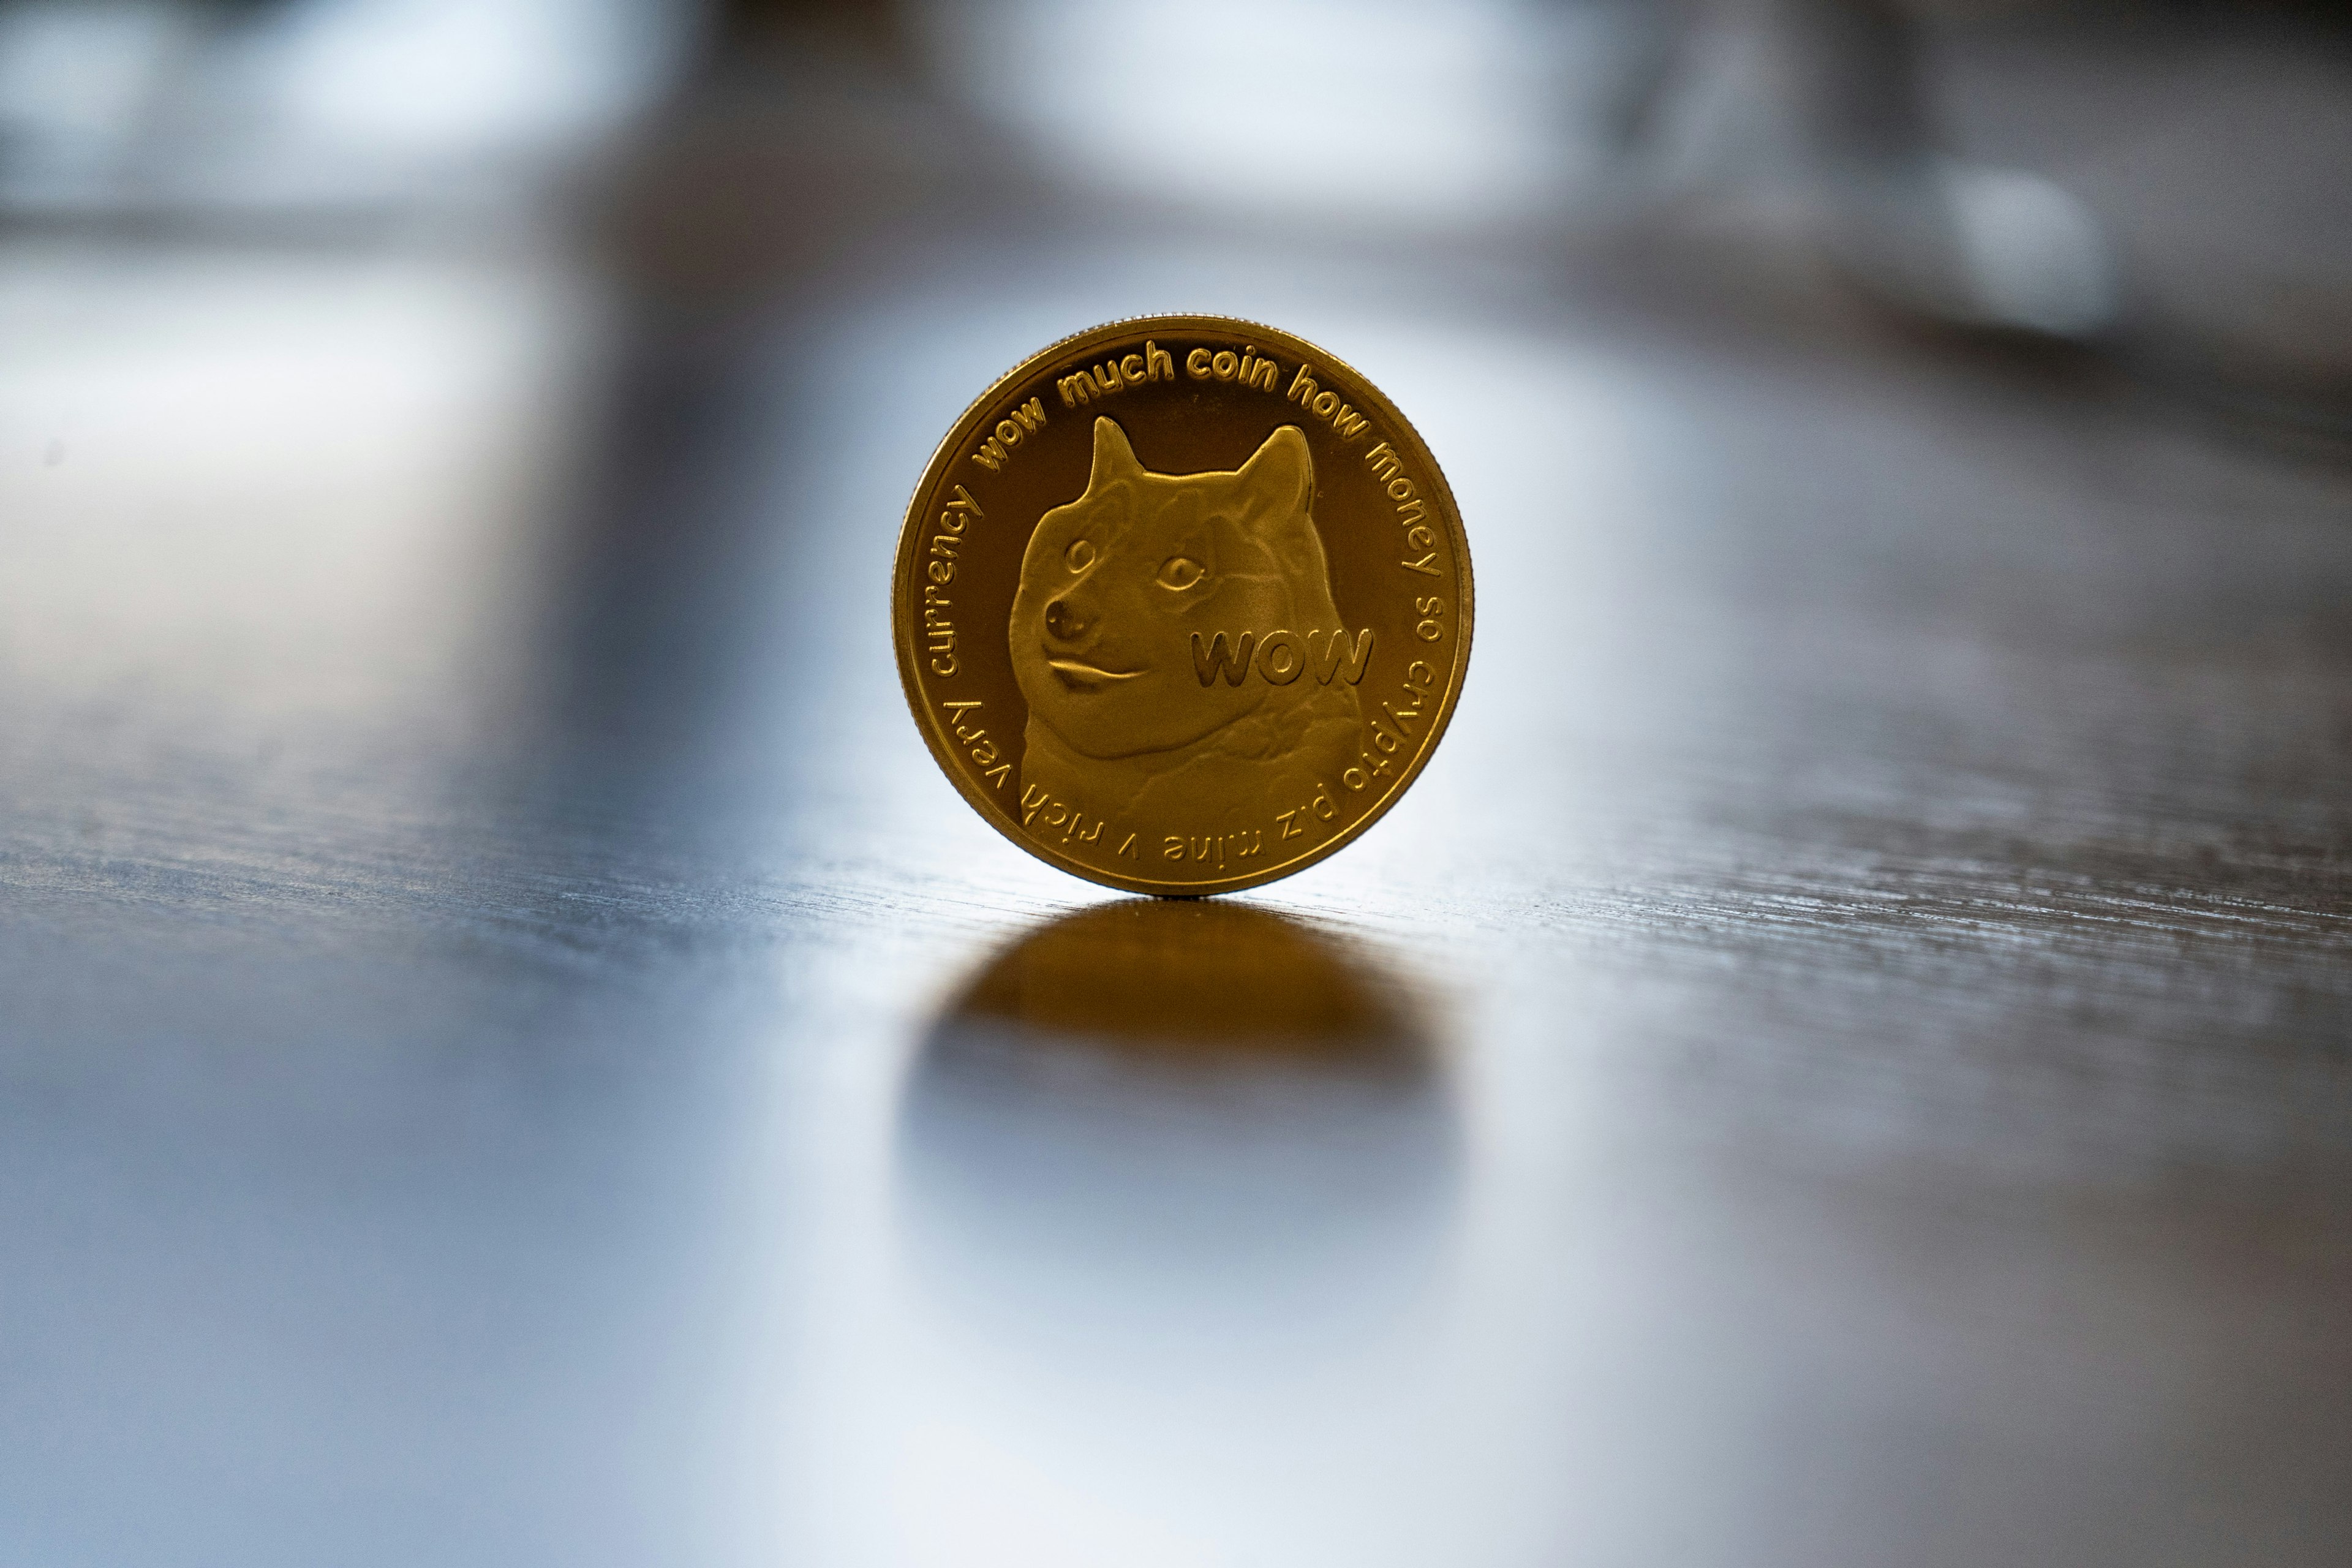 A dogecoin coin sitting on a table